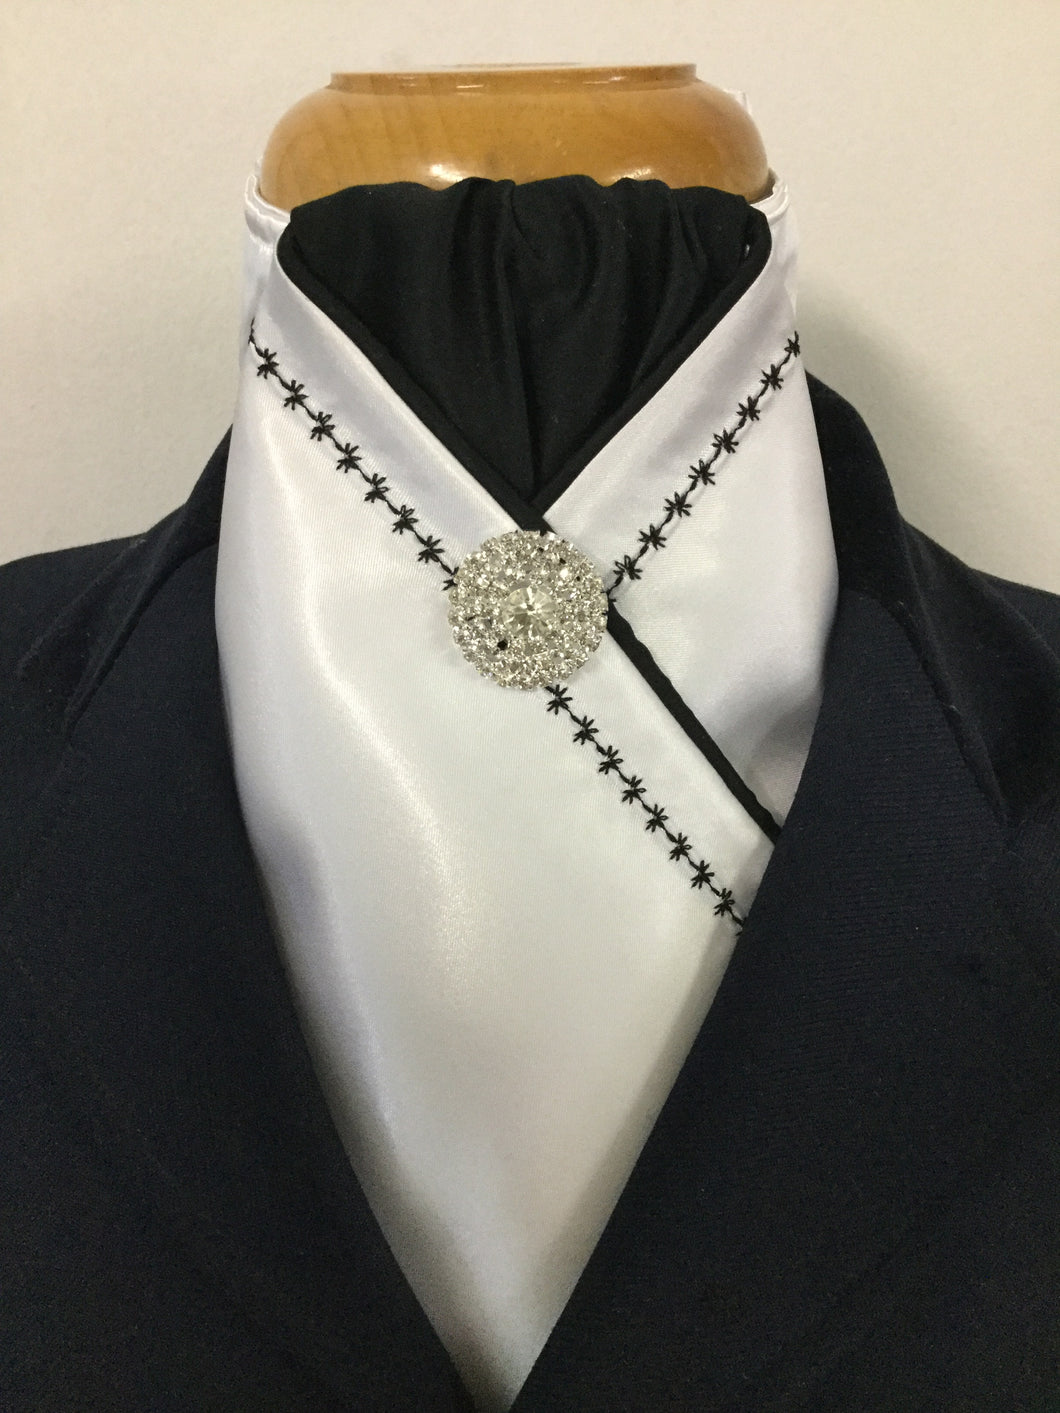 HHD White Satin Pretied Stock Tie Embroidered in Black